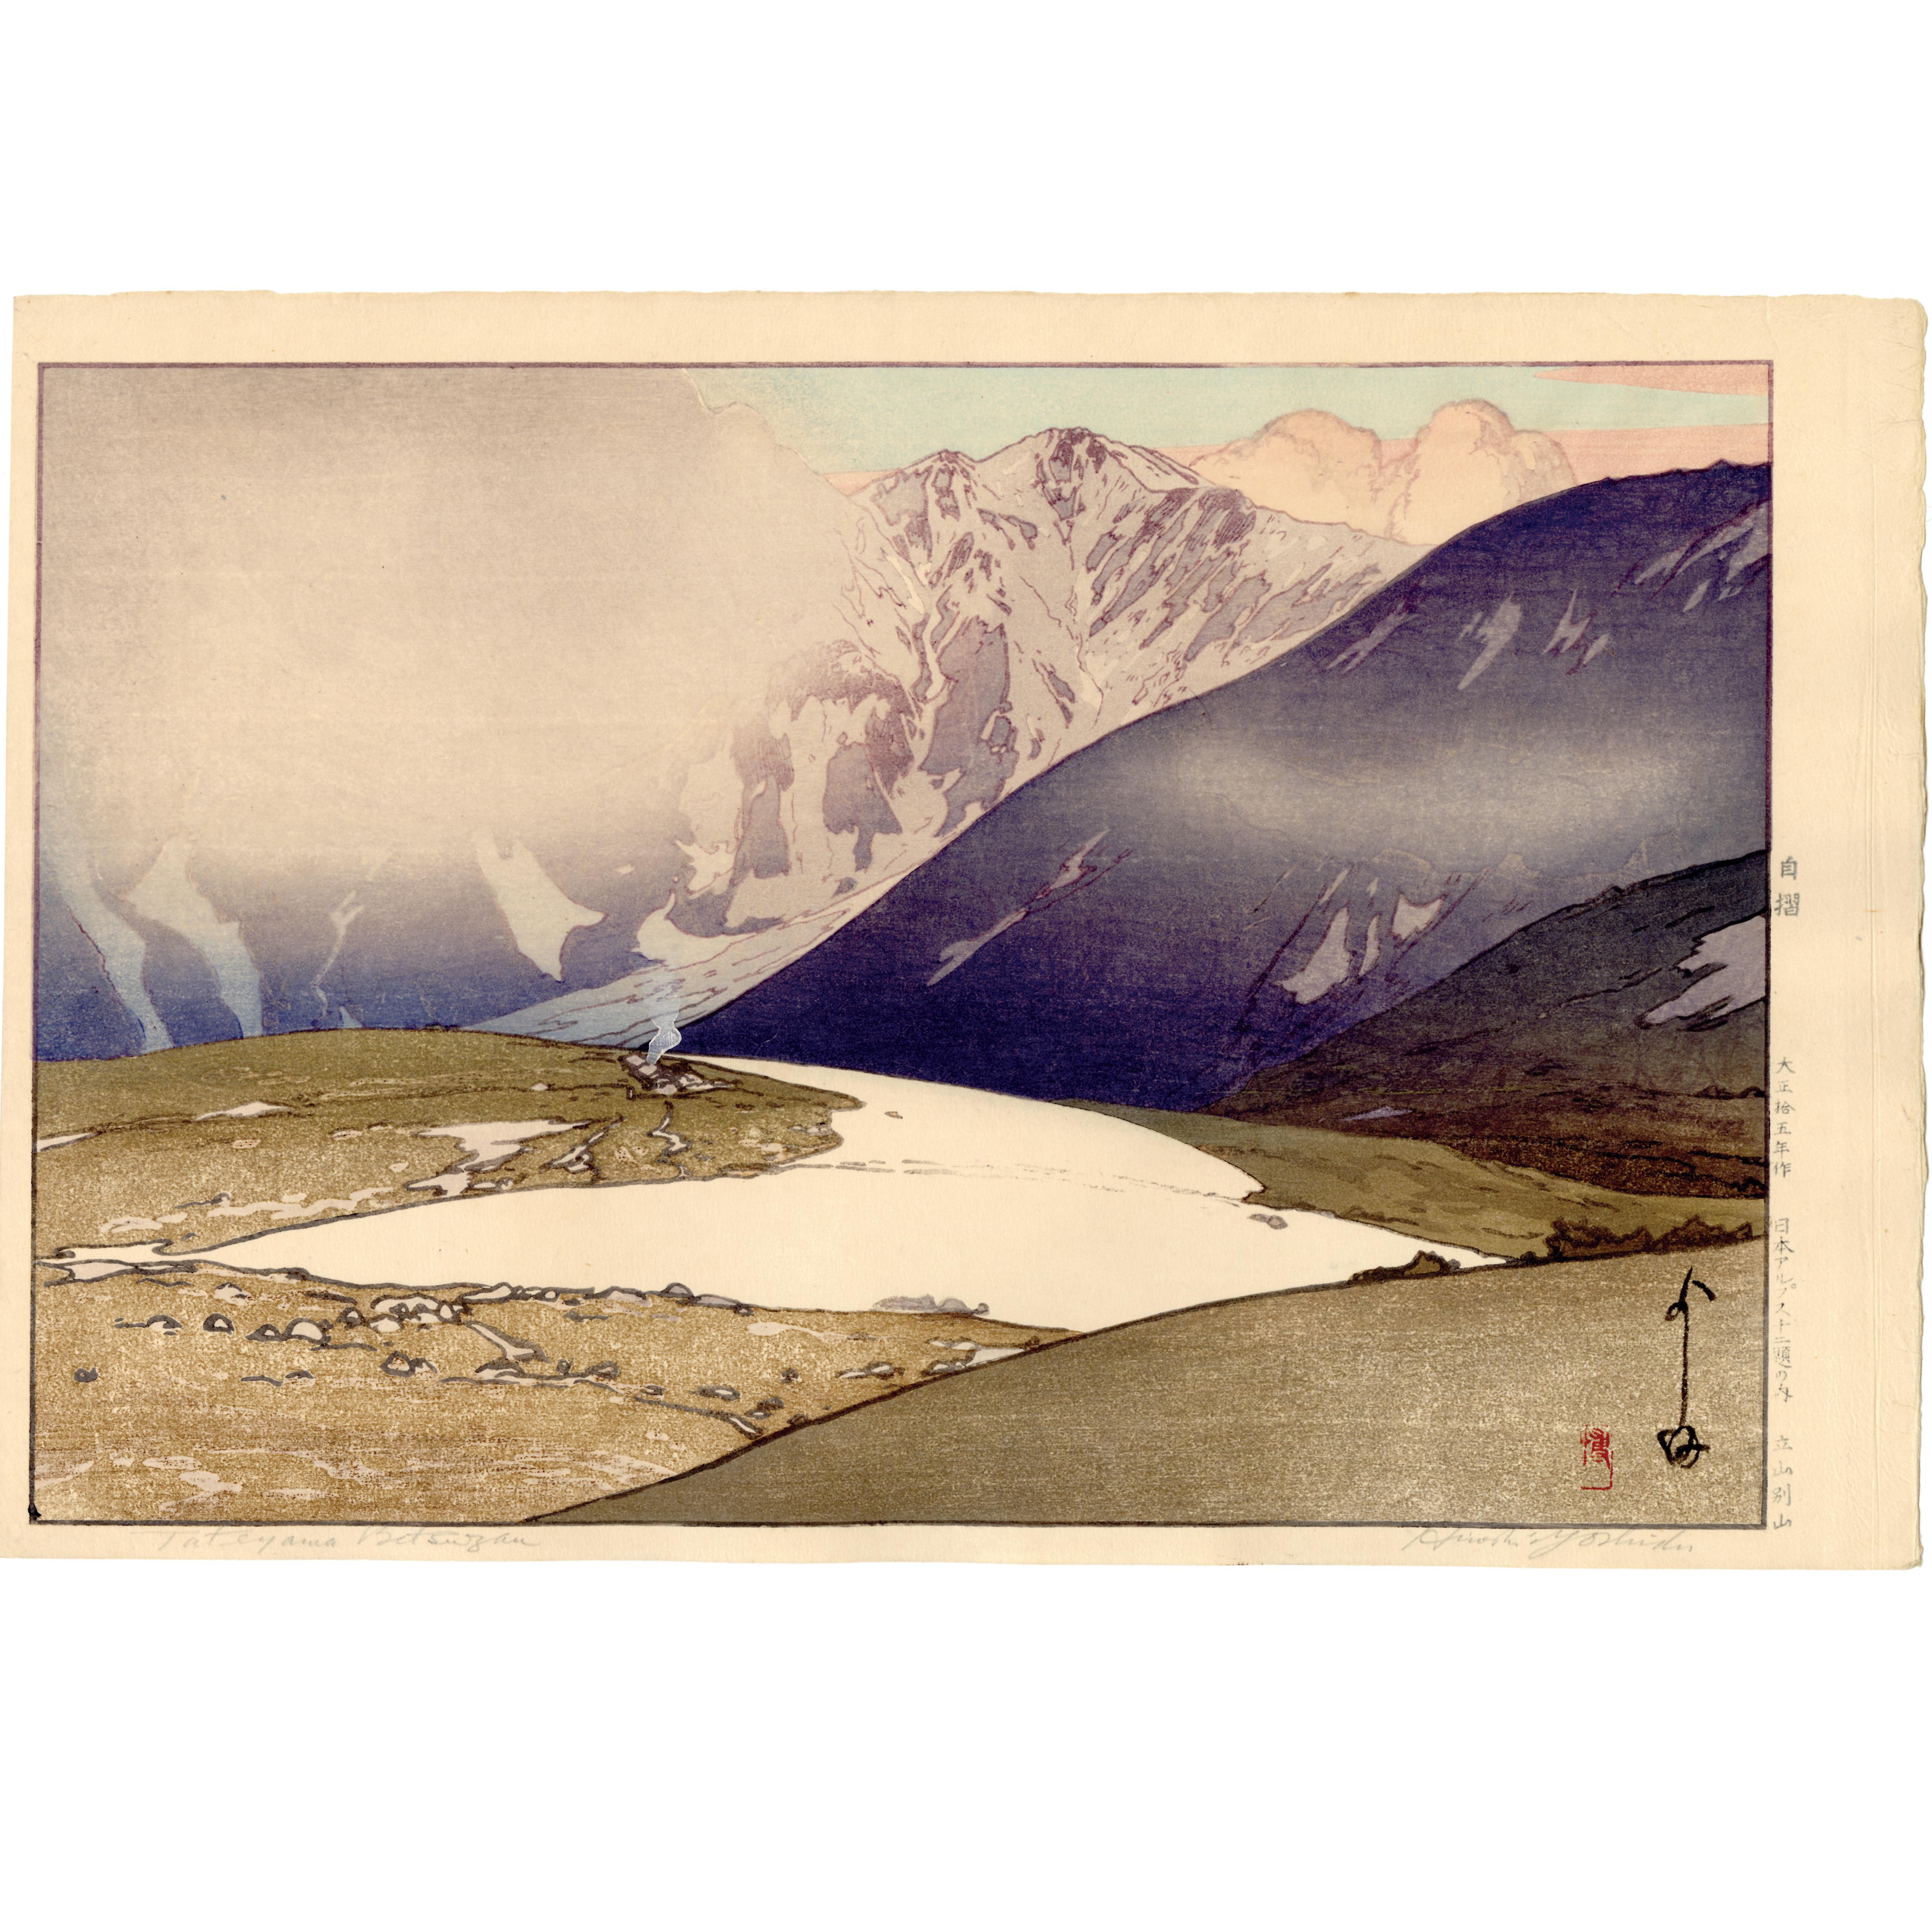 Tateyama Betsuzan from the Japan Alps Series - Beige Landscape Print by Hiroshi Yoshida